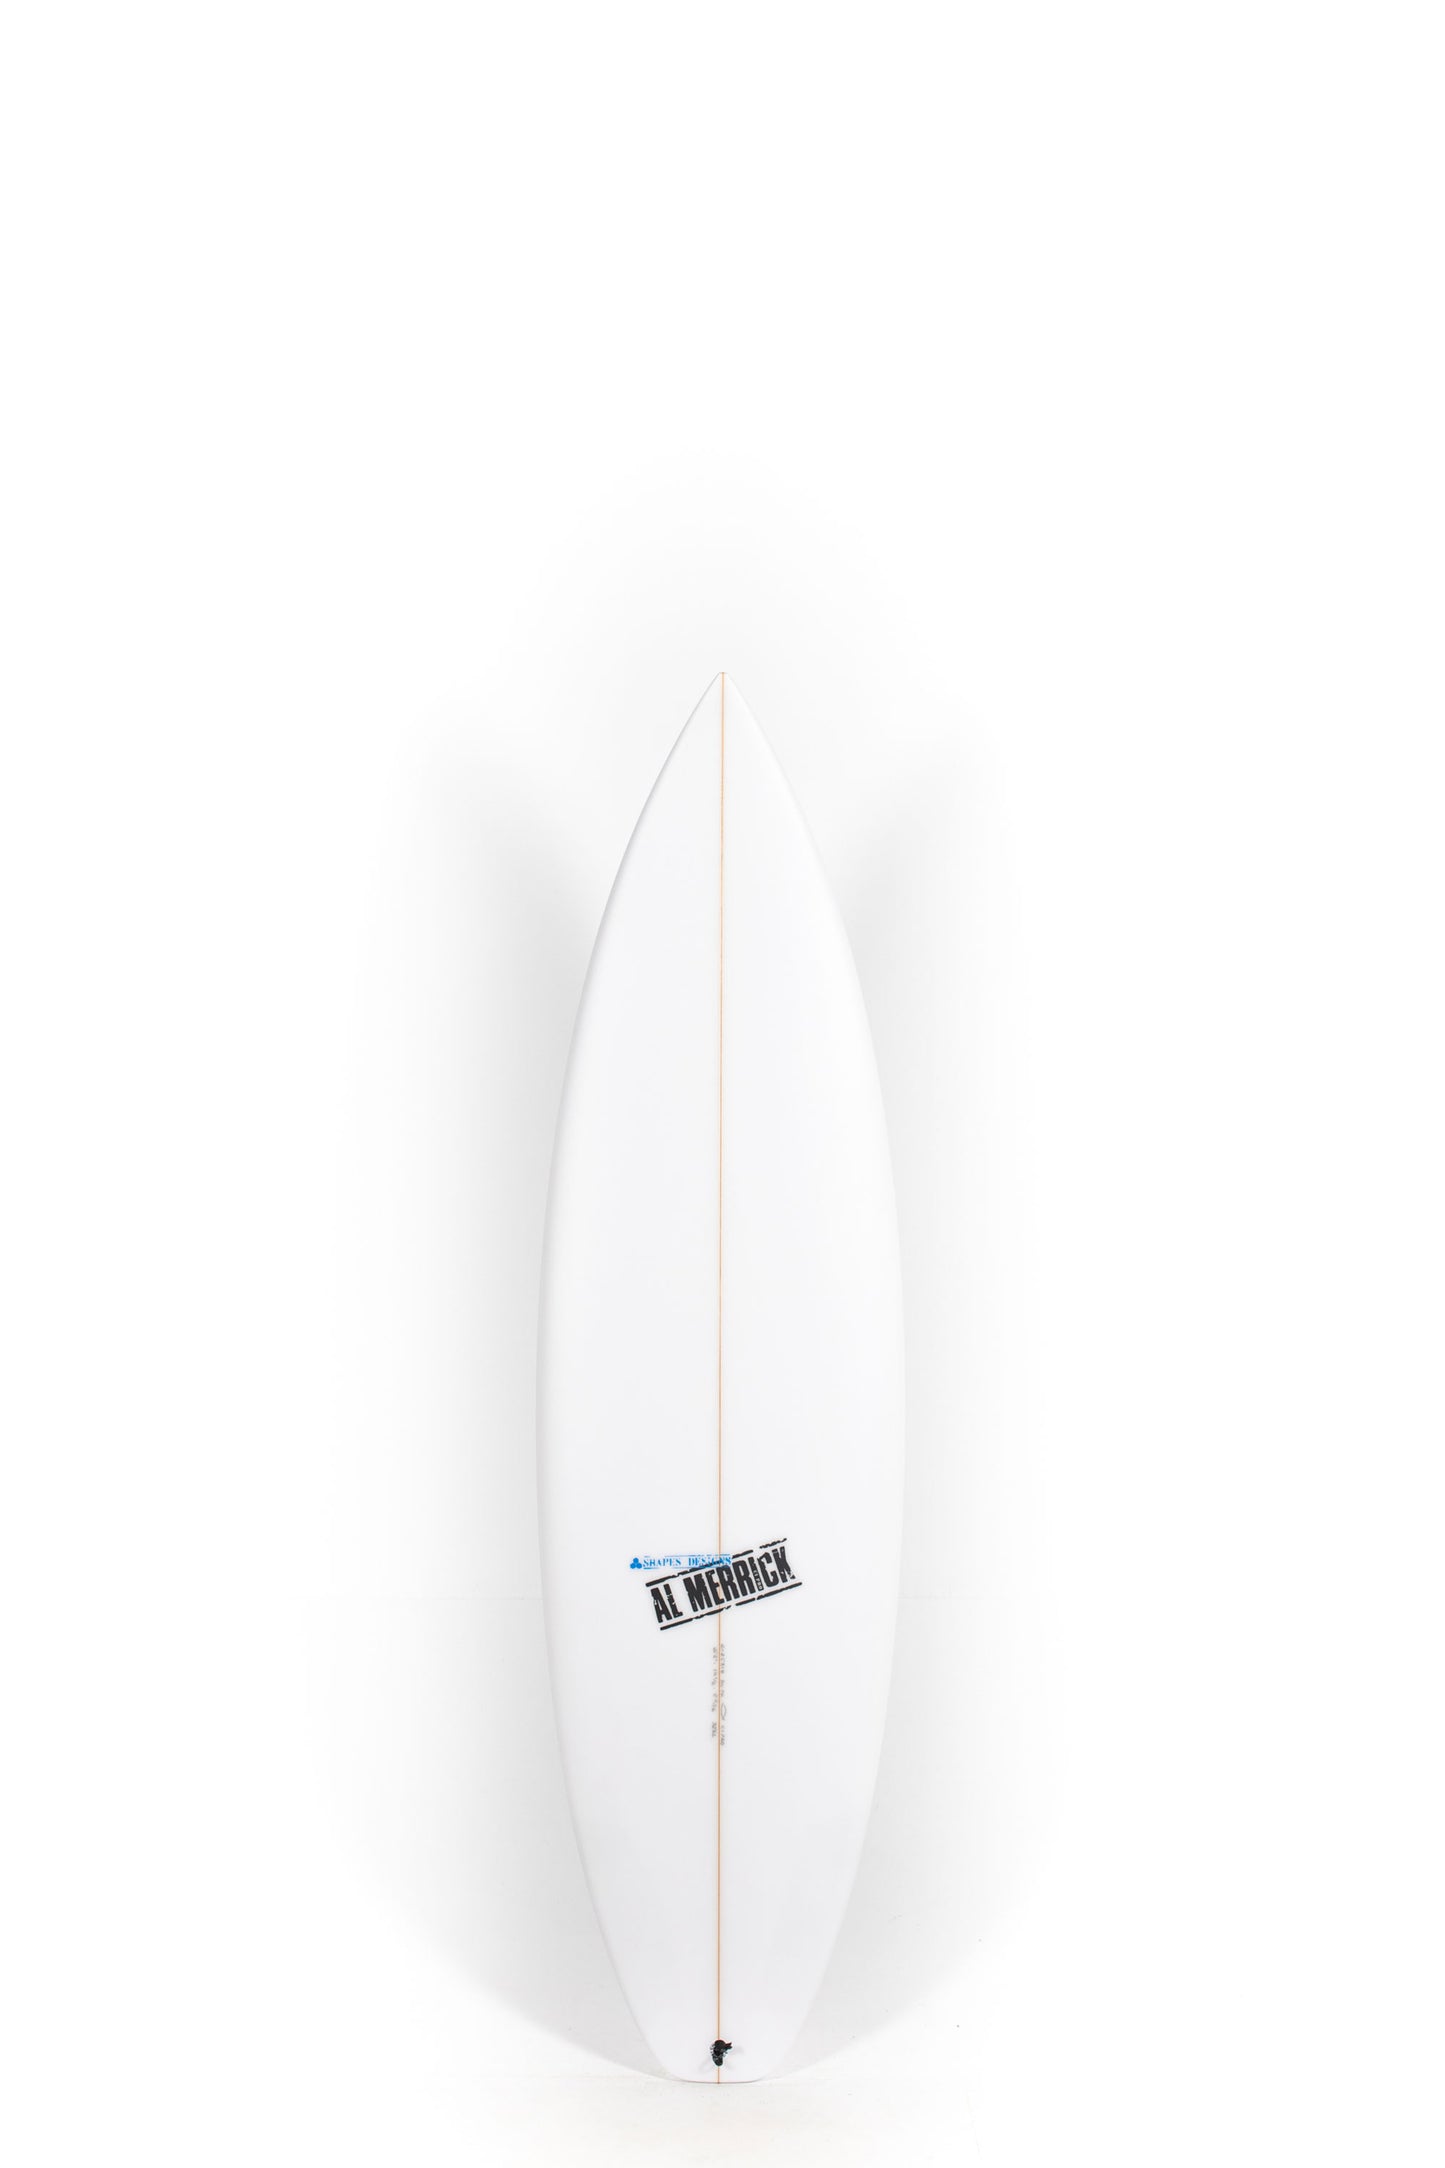 Pukas Surf Shop - Channel Islands - CI PRO by Britt Merrick - 6'2" x 19 1/2 x 2 9/16 - 32.8L - CI25318